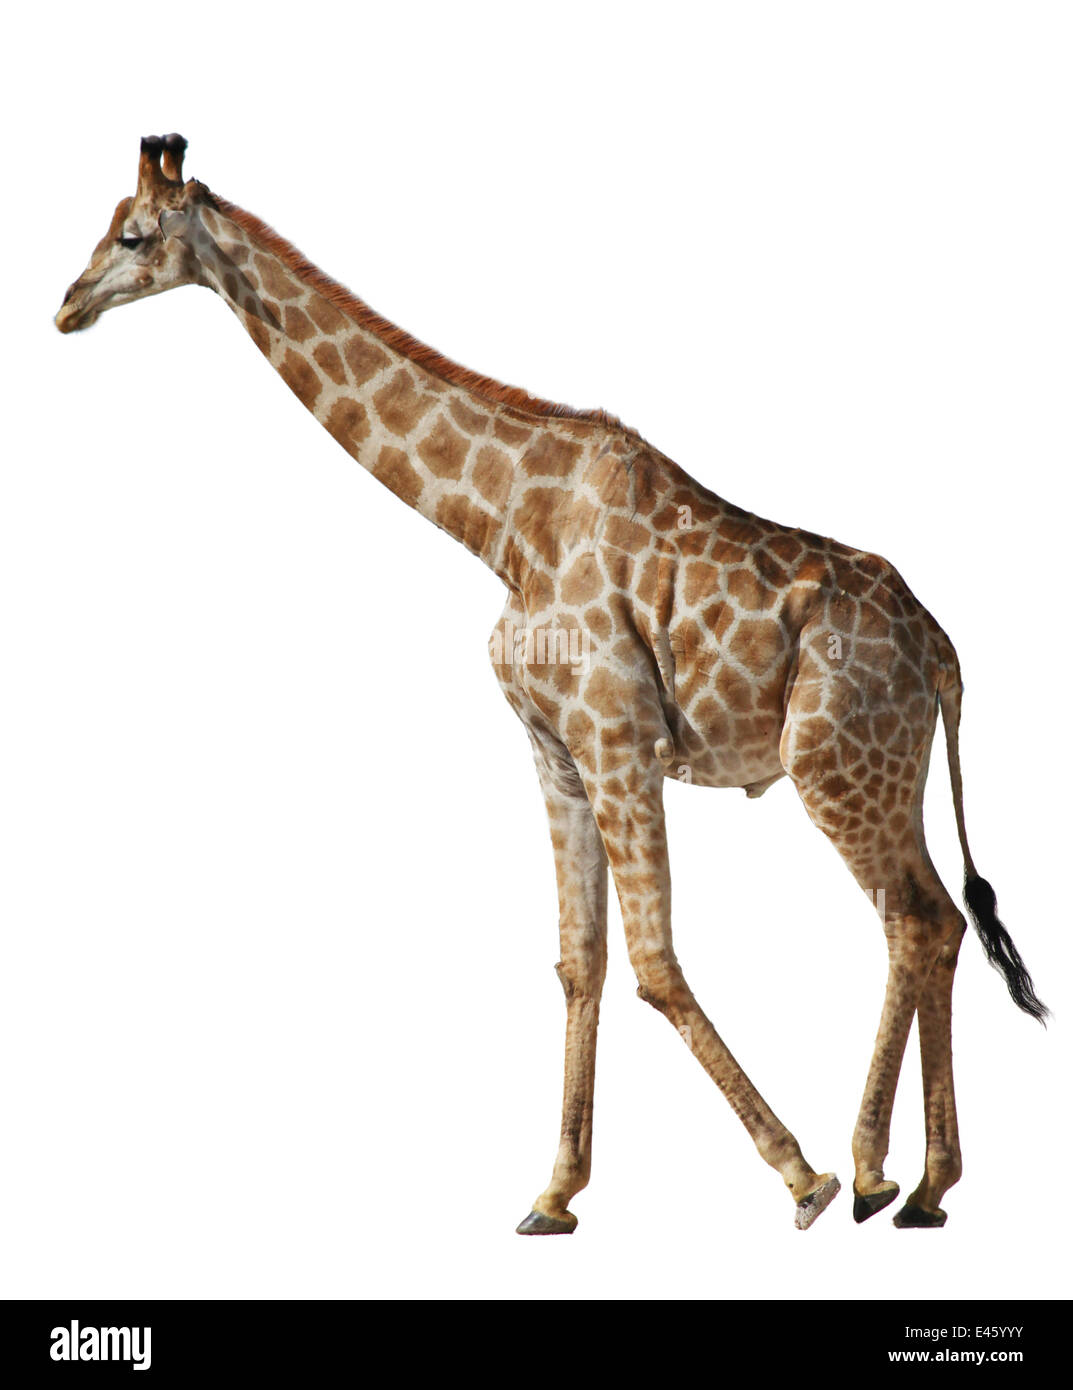 Giraffe (Giraffa camelopardalis) in profile  (wild animal photogaphed in Africa, background digitally removed) Stock Photo